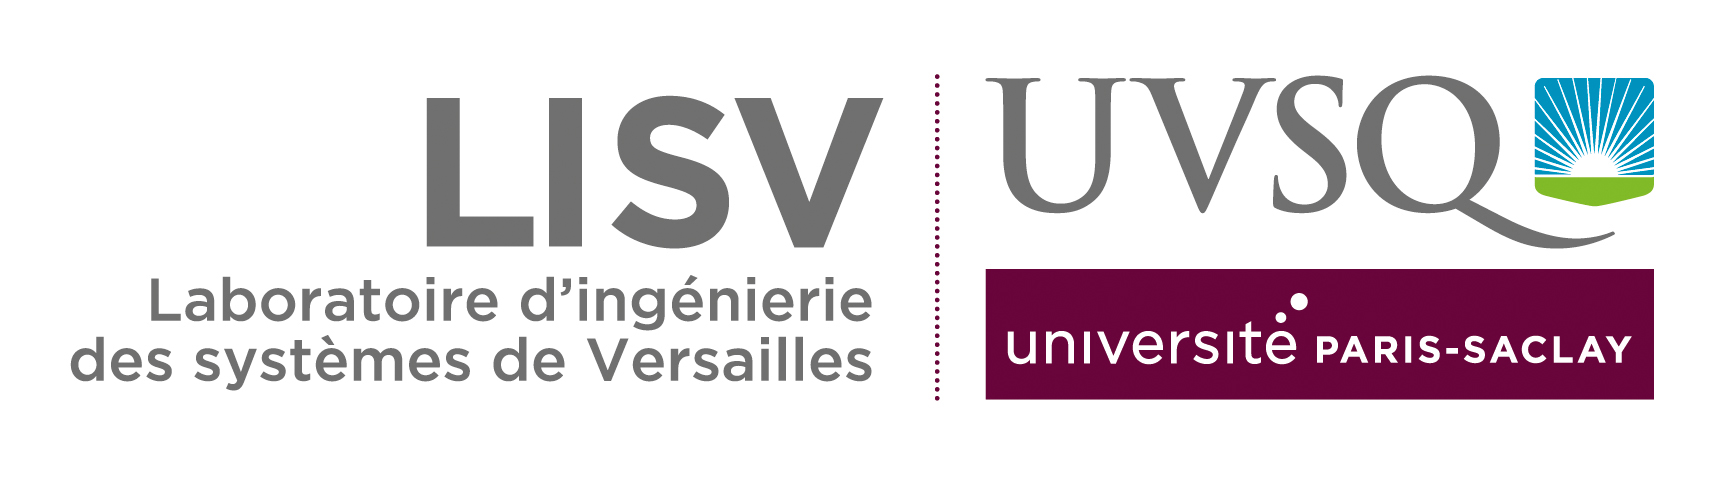 Logo LISV 2020